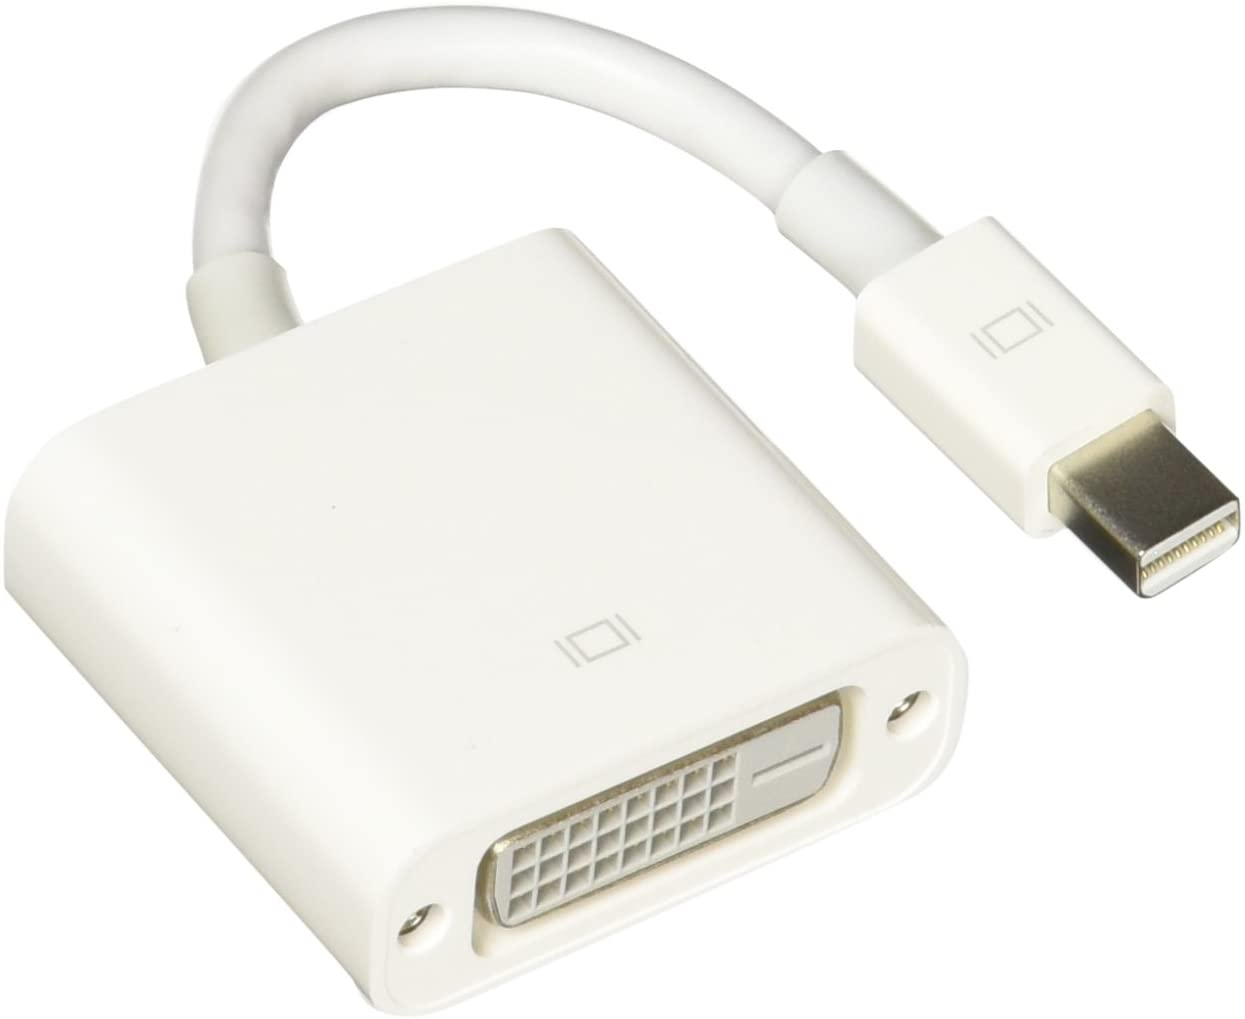 Apple Mini DisplayPort to DVI Adapter White